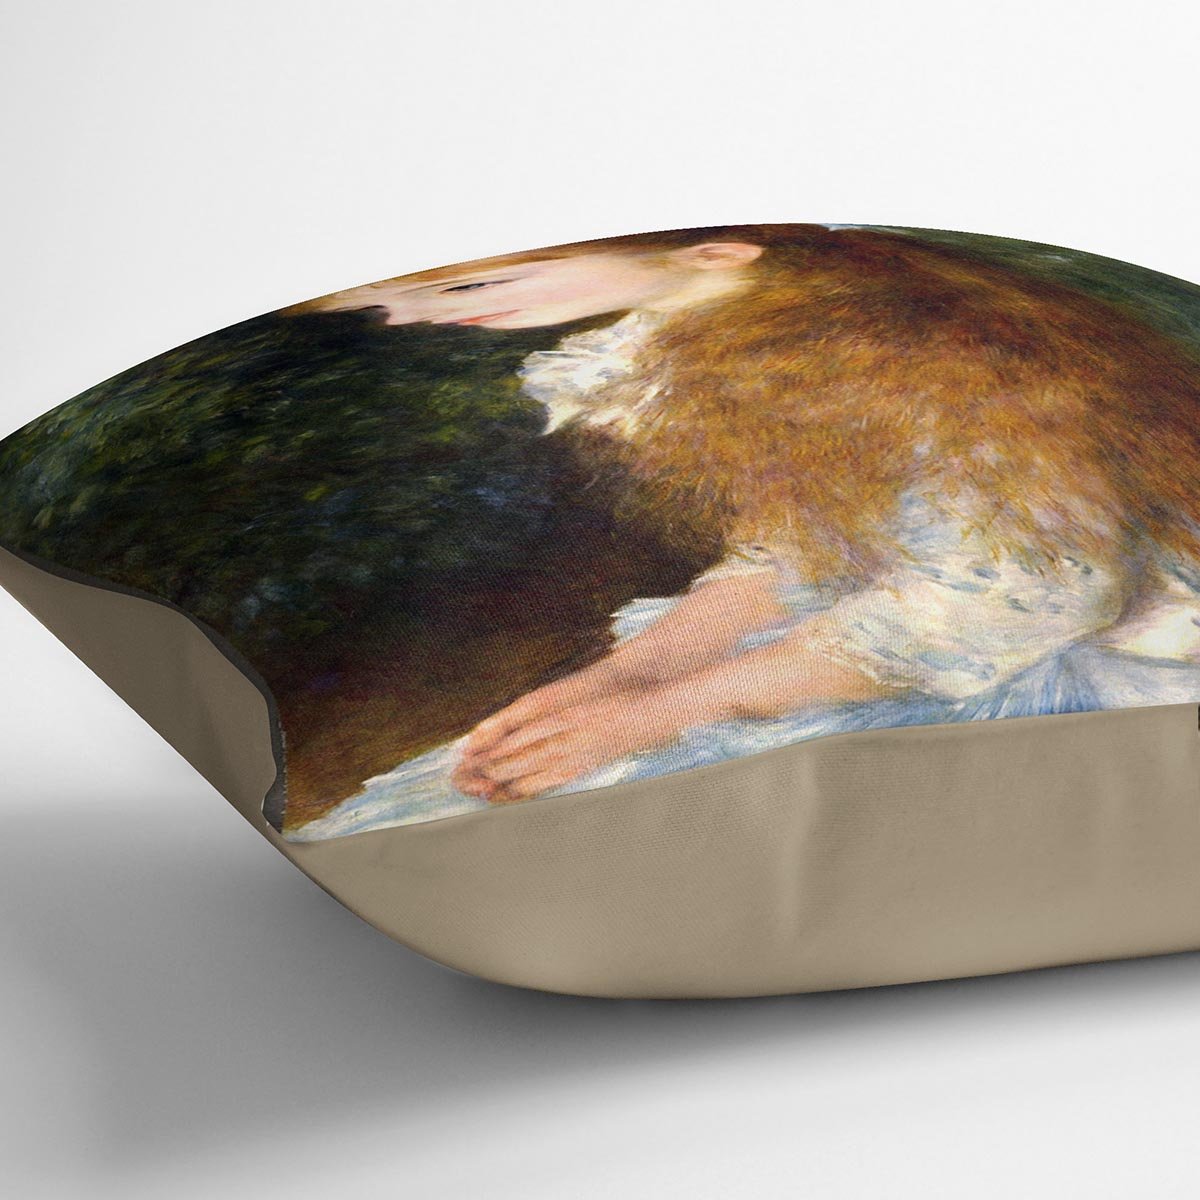 Irene Cahen d Anvers by Renoir Throw Pillow